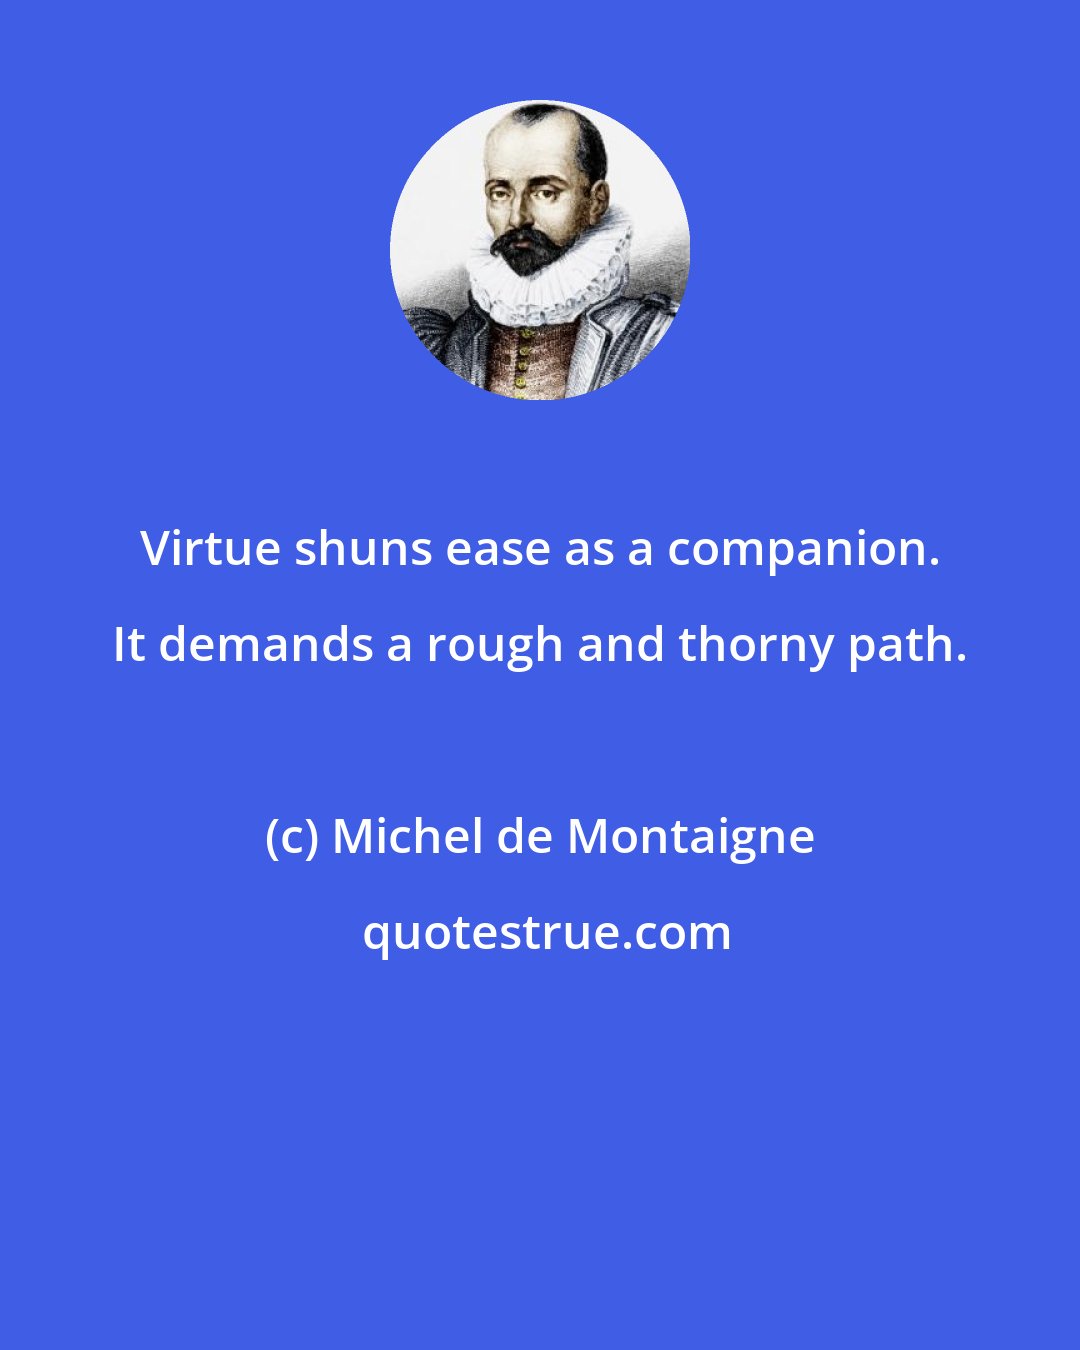 Michel de Montaigne: Virtue shuns ease as a companion. It demands a rough and thorny path.